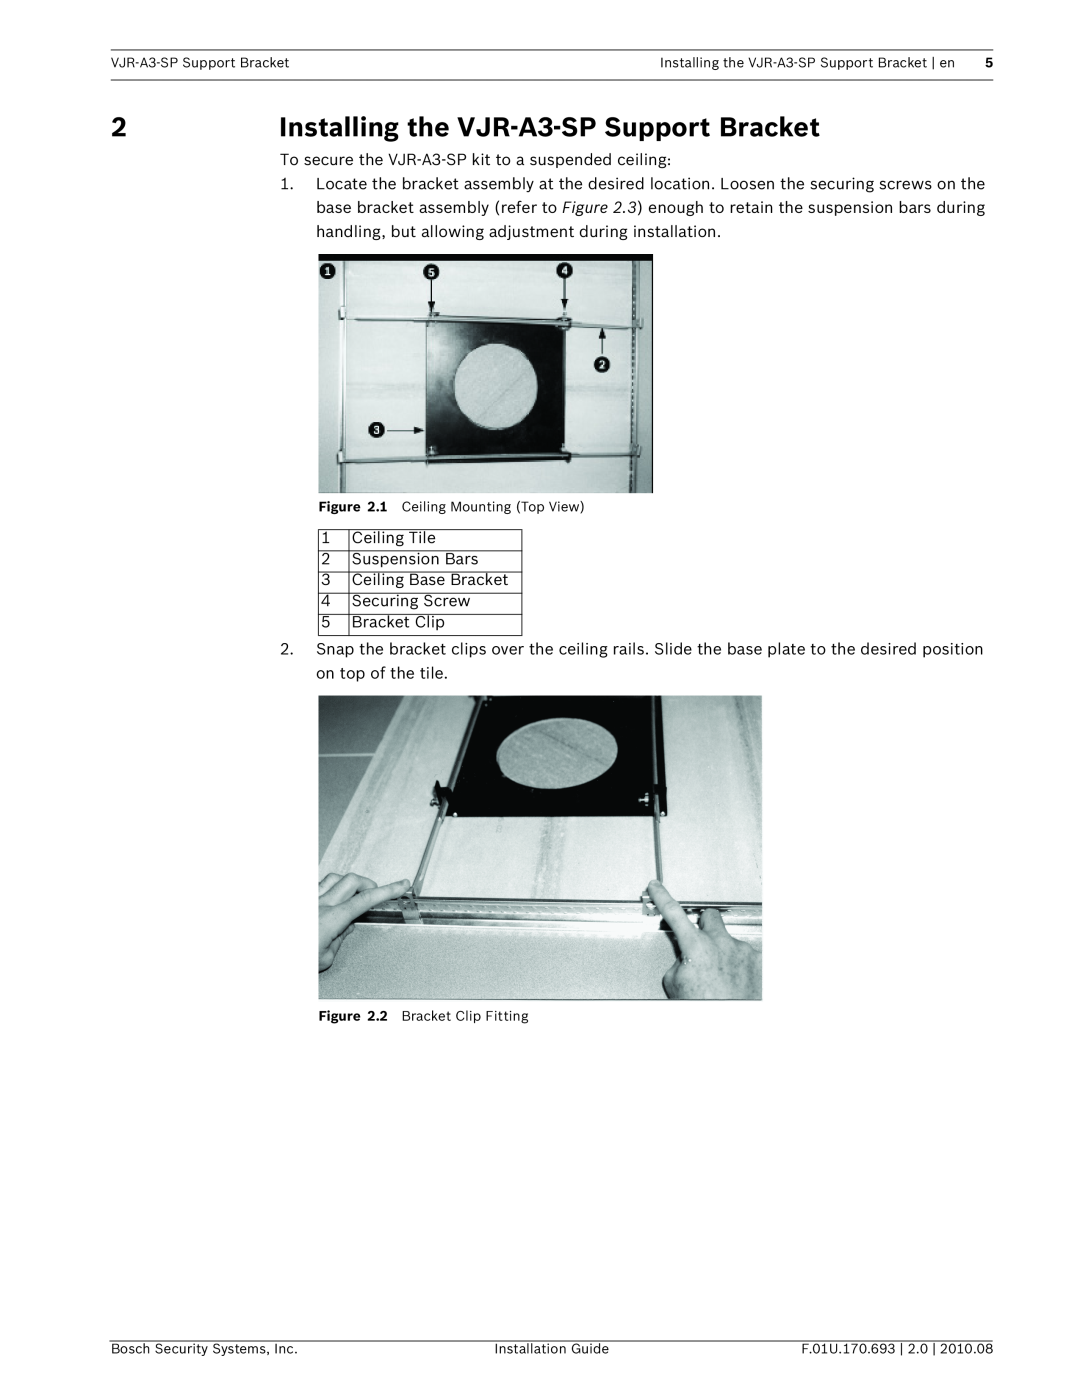 Bosch Appliances manual Installing the VJR-A3-SP Support Bracket 